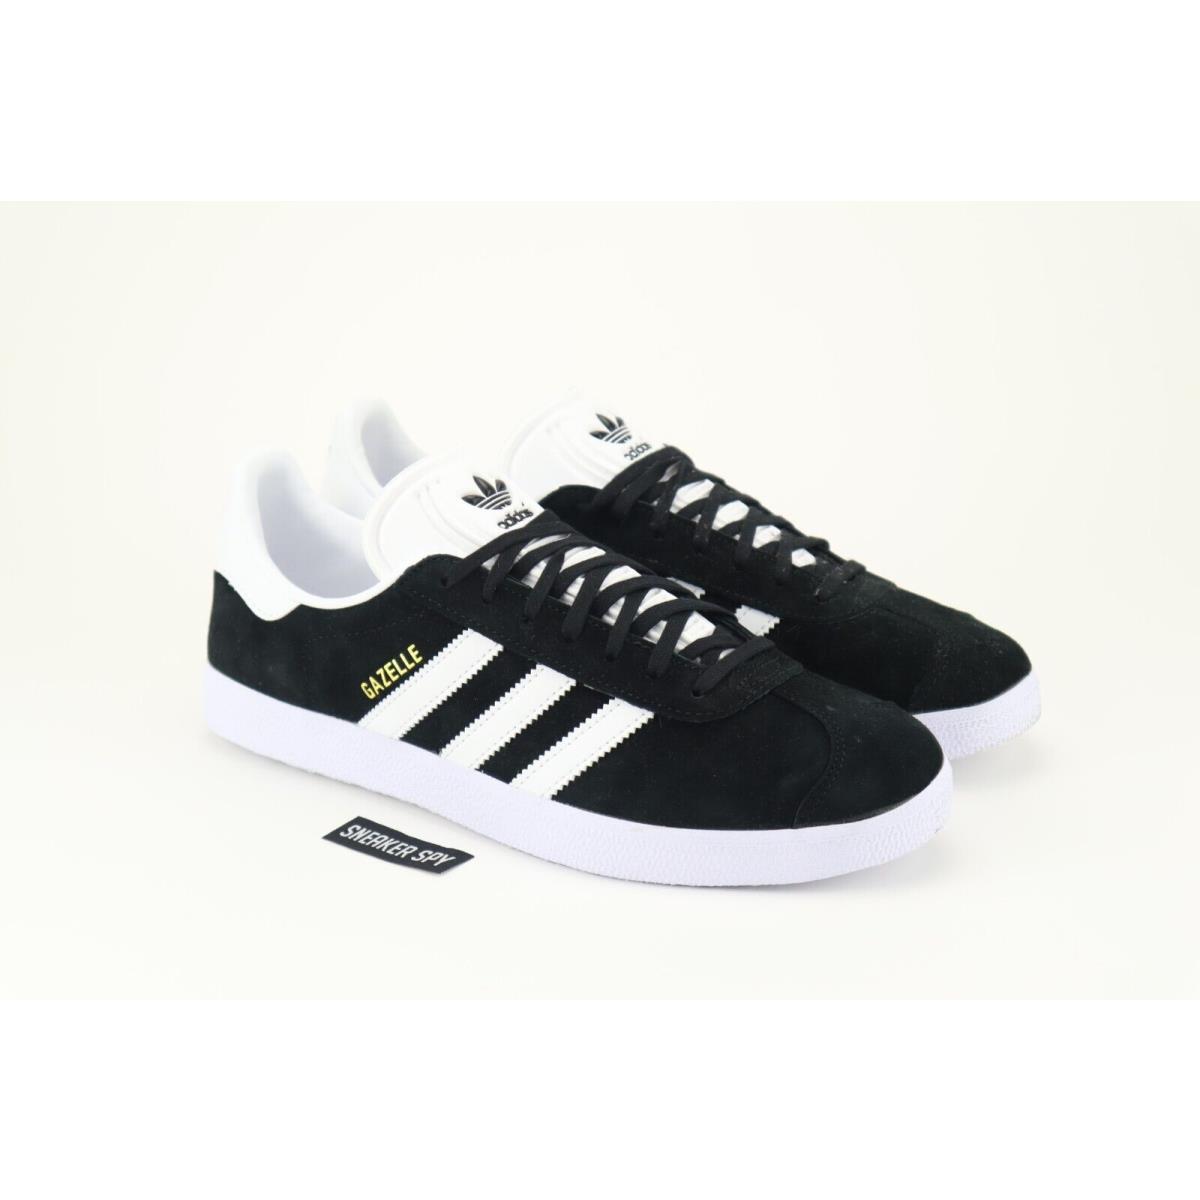 Adidas OG Black Men`s Sneakers Originals BB5476 | 692740463216 - Adidas shoes Gazelle - Black |